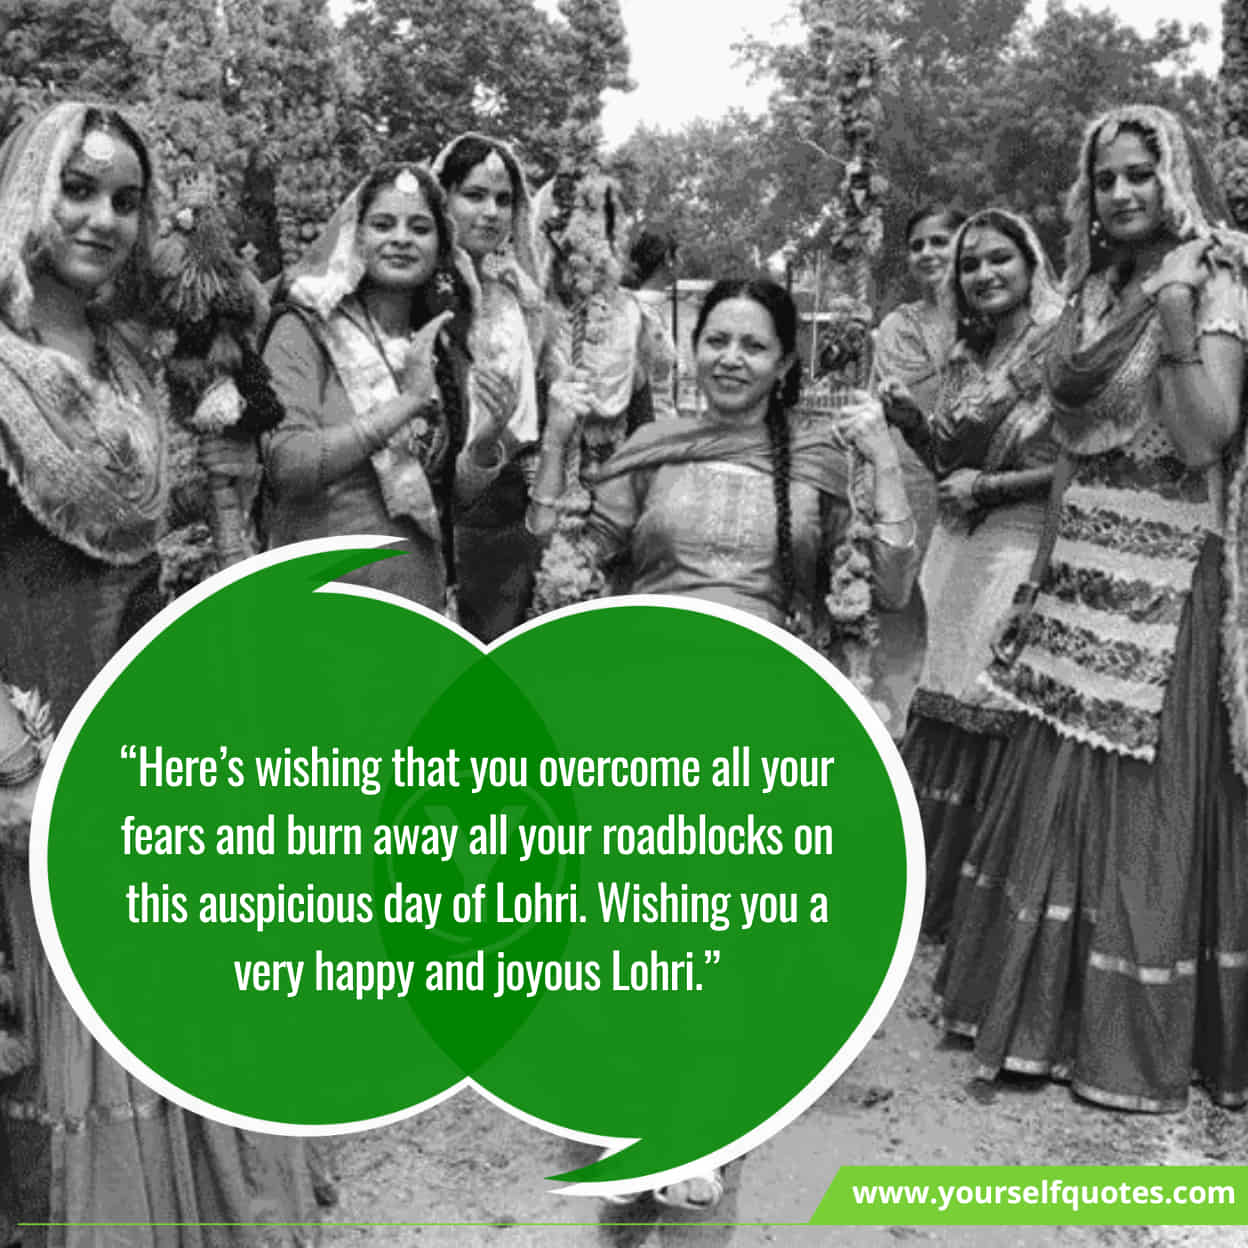 Inspiring Messages For Happy Lohri 